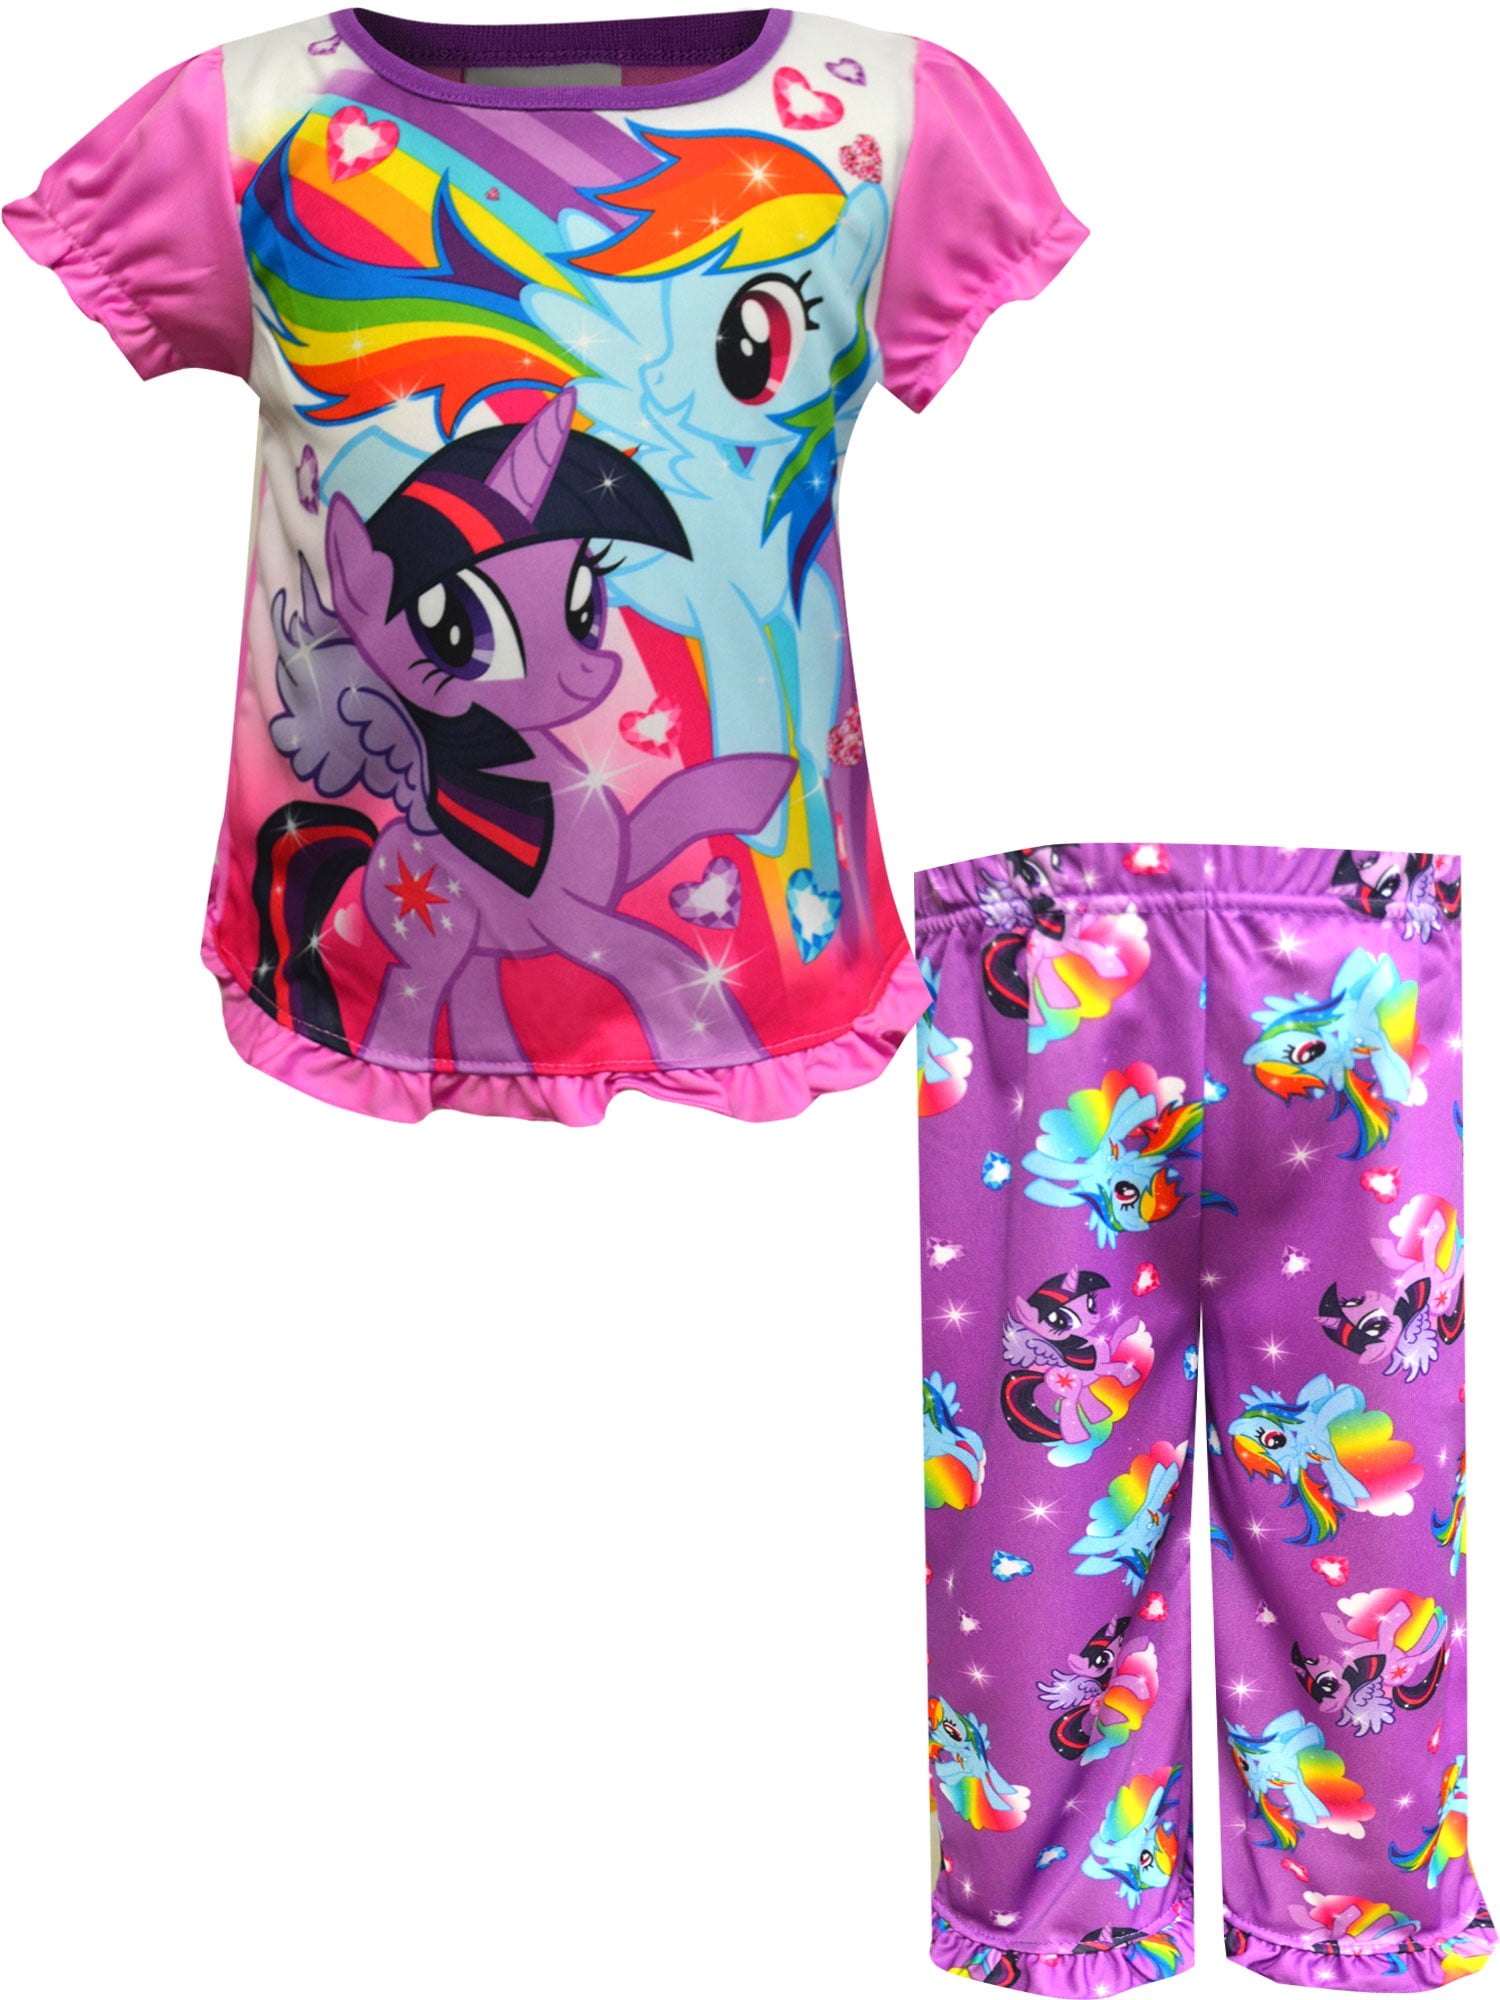 Girls My Little Pony Short Pyjamas Kids Rainbow Friends Shortie PJs Set Size 